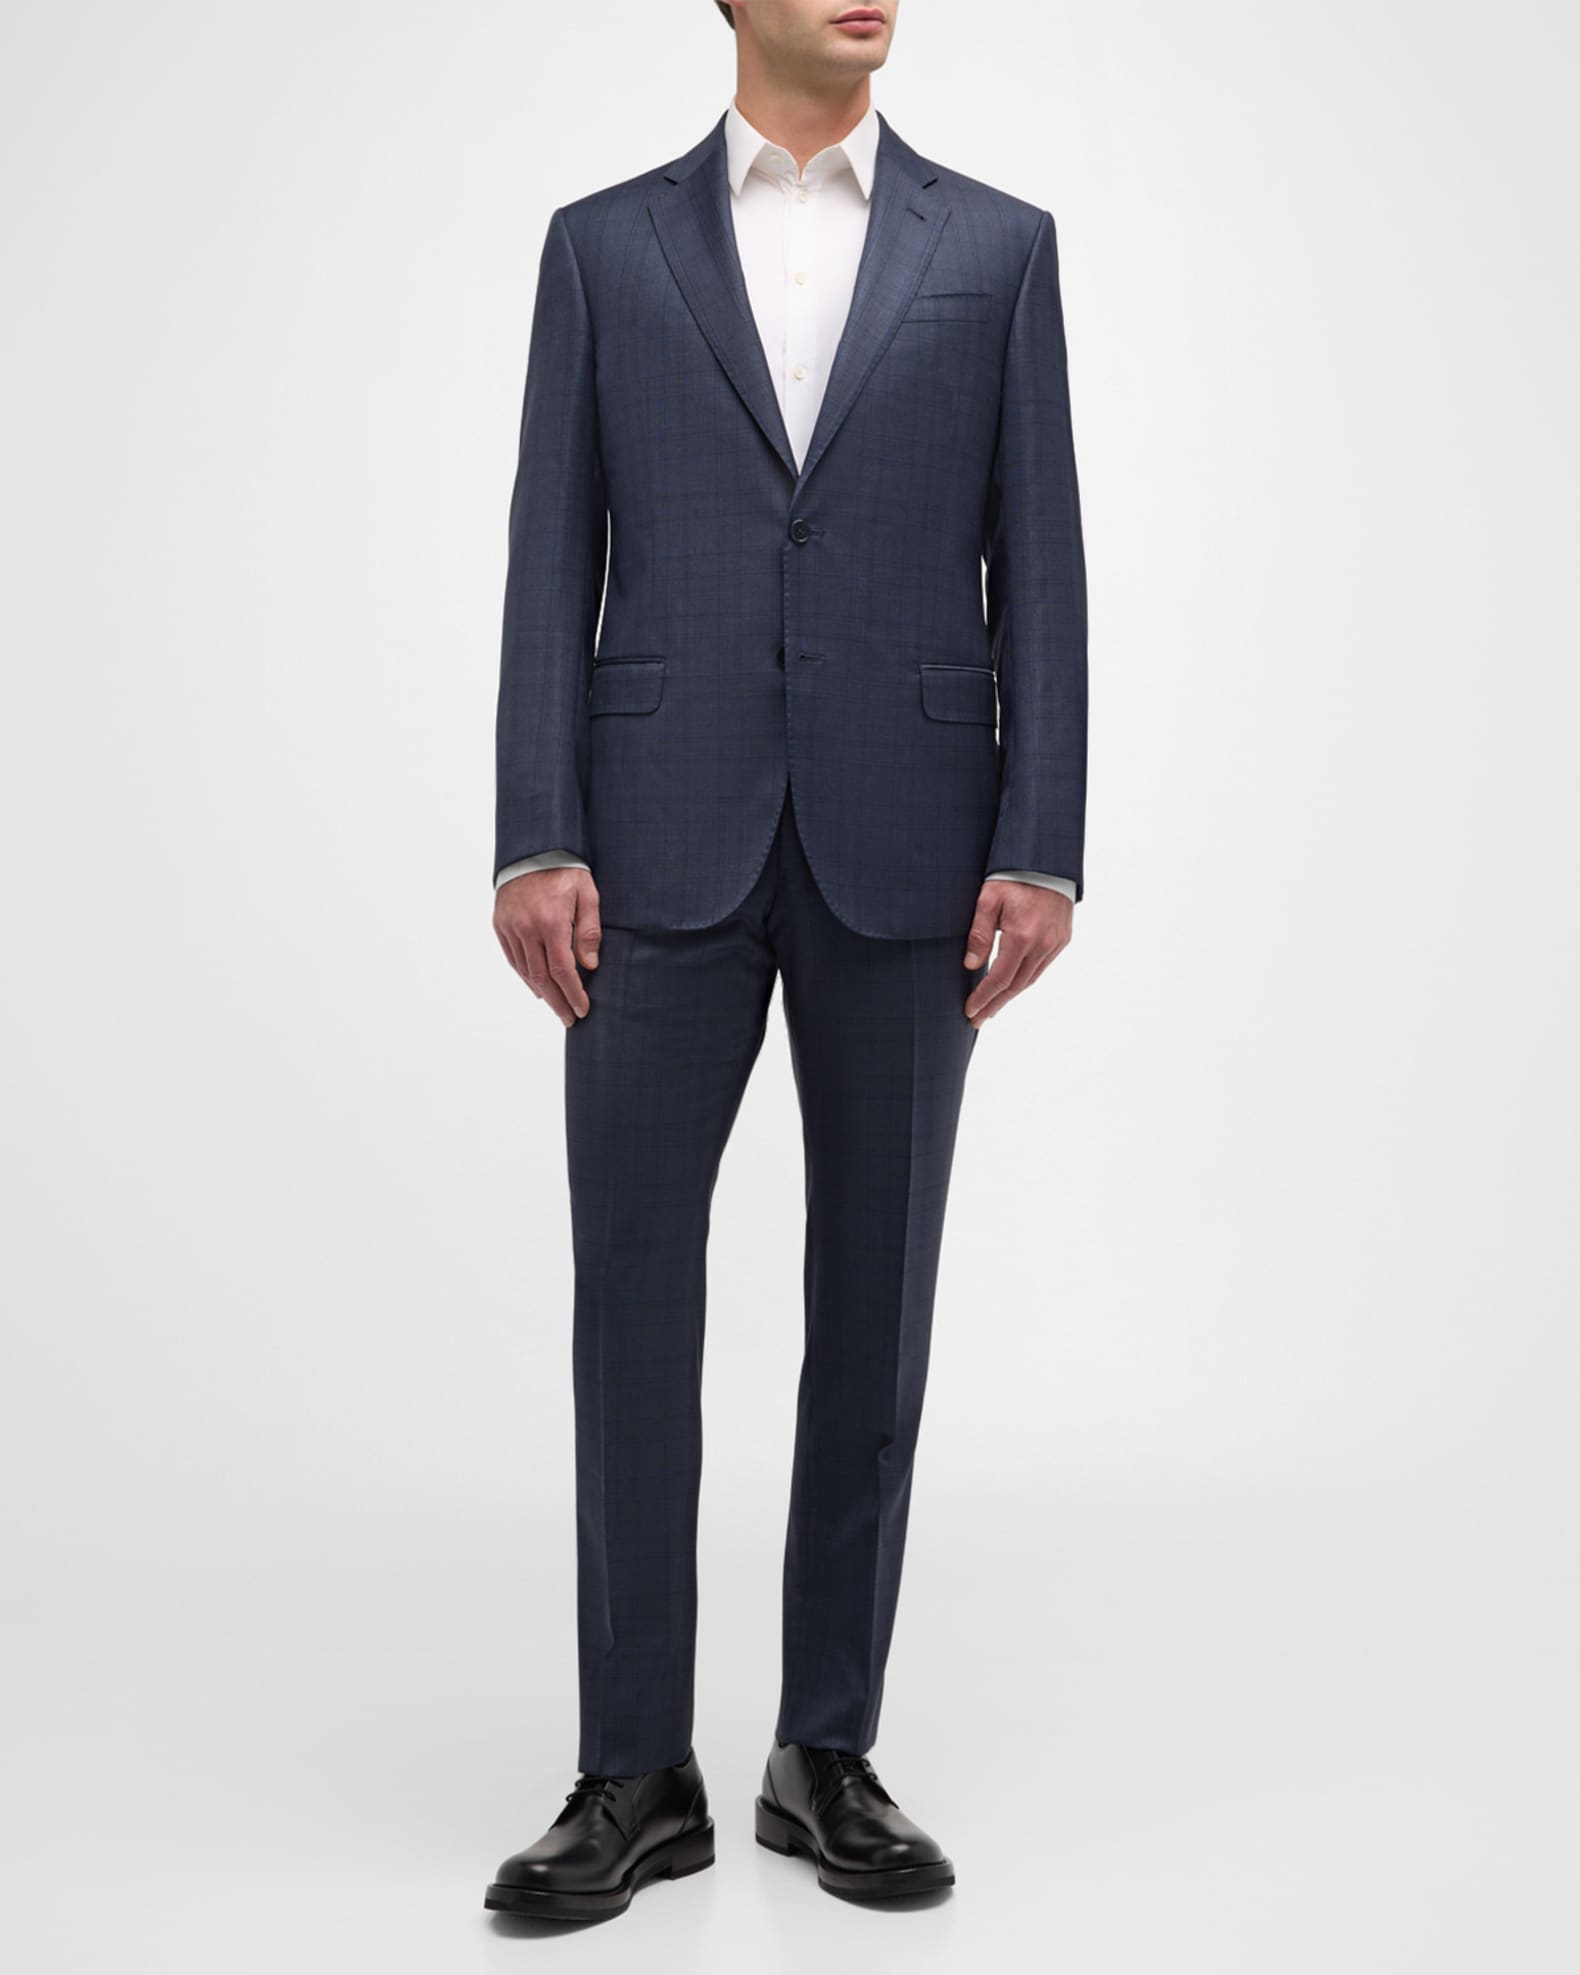 Emporio Armani Men's G-Line Tonal Plaid Suit | Neiman Marcus